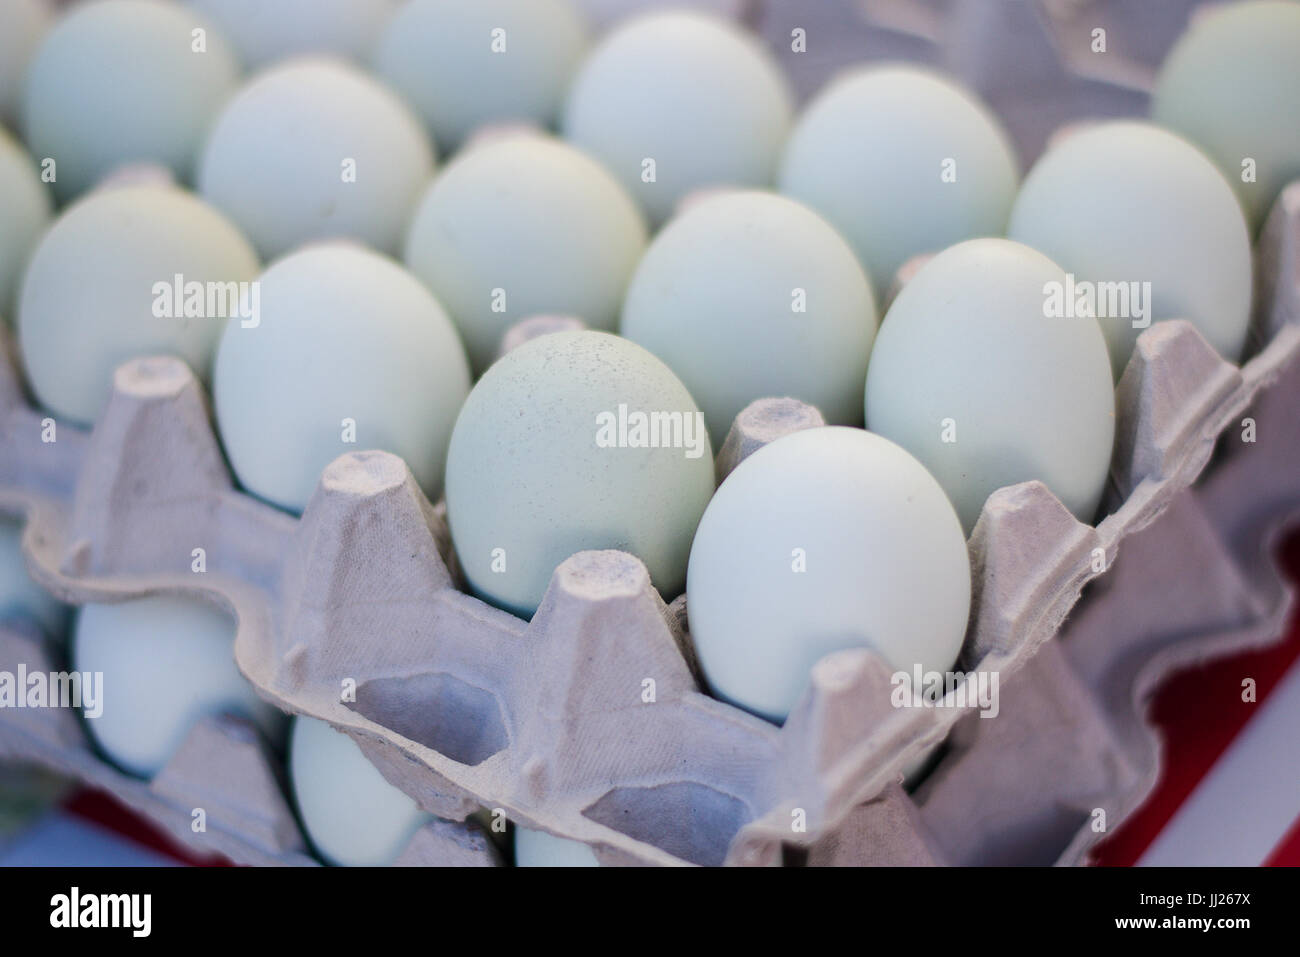 Organic fresh farmer's market eggs in crates Stock Photo